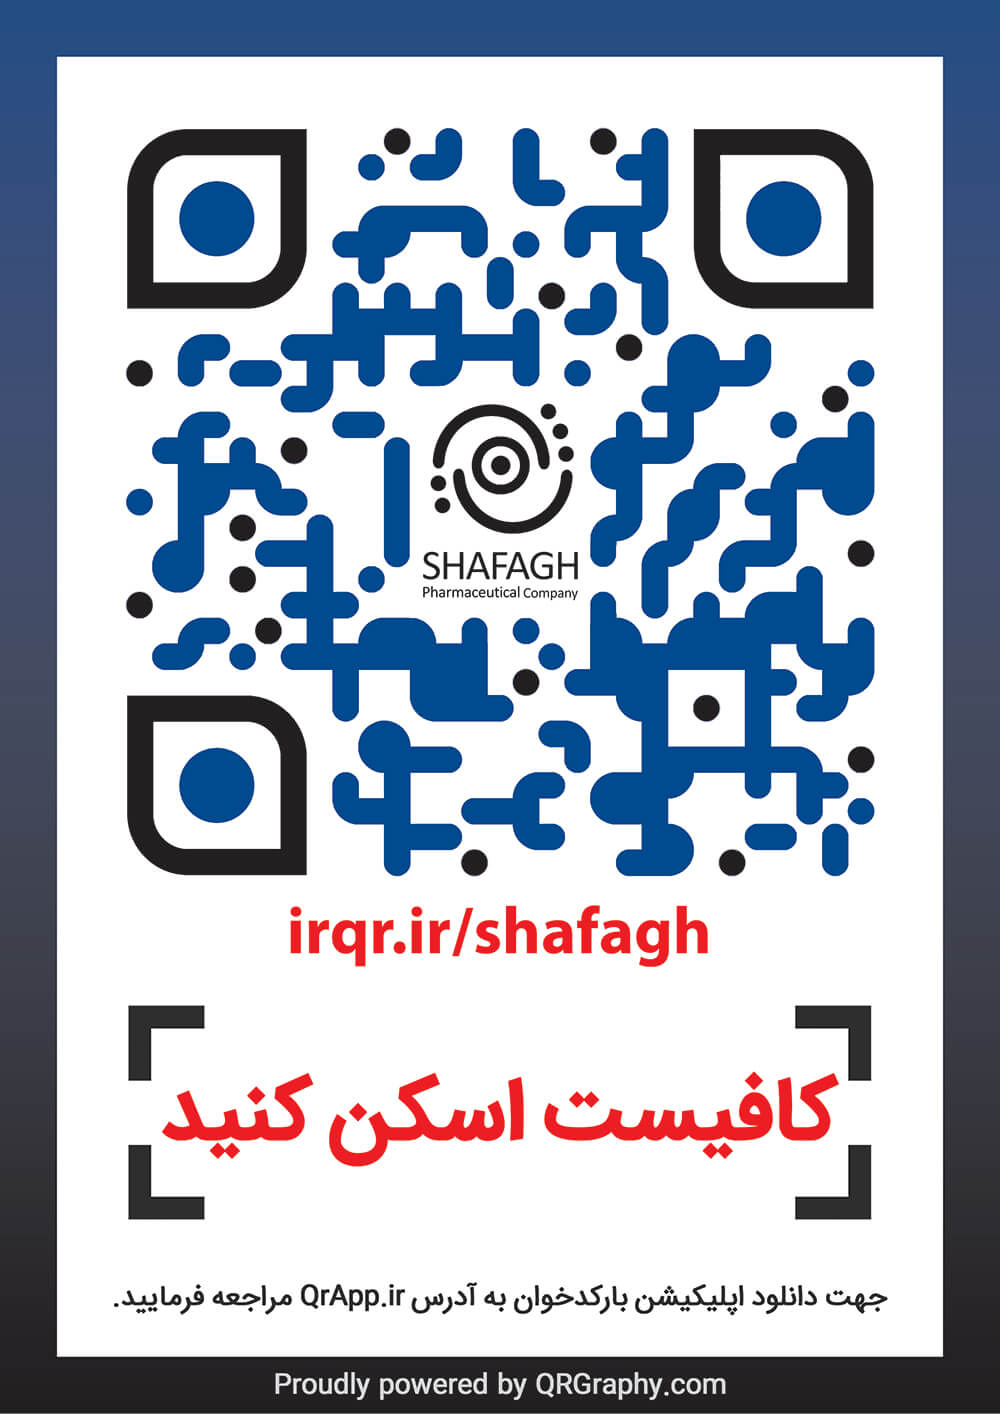 shafagh pharmaceutical company